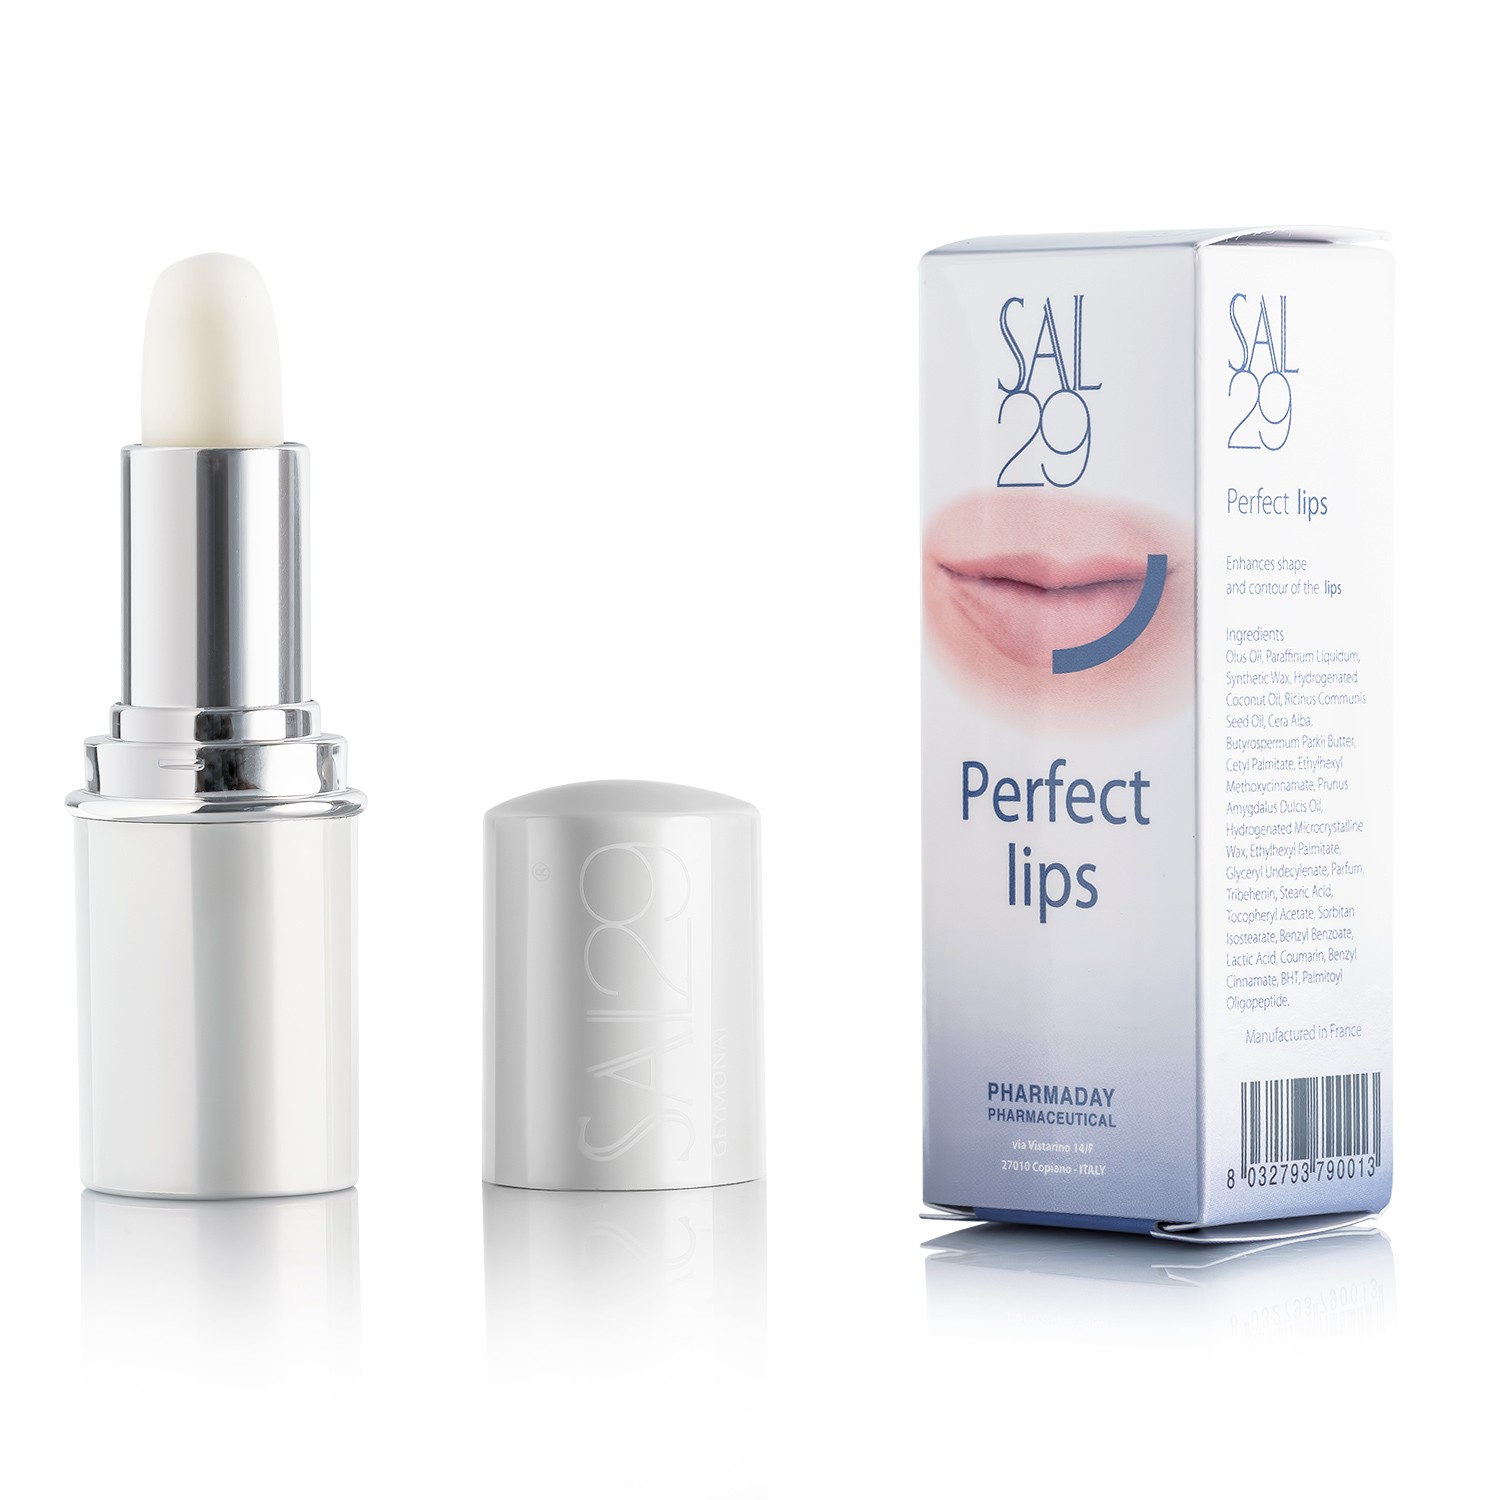 SAL29 Perfect lips